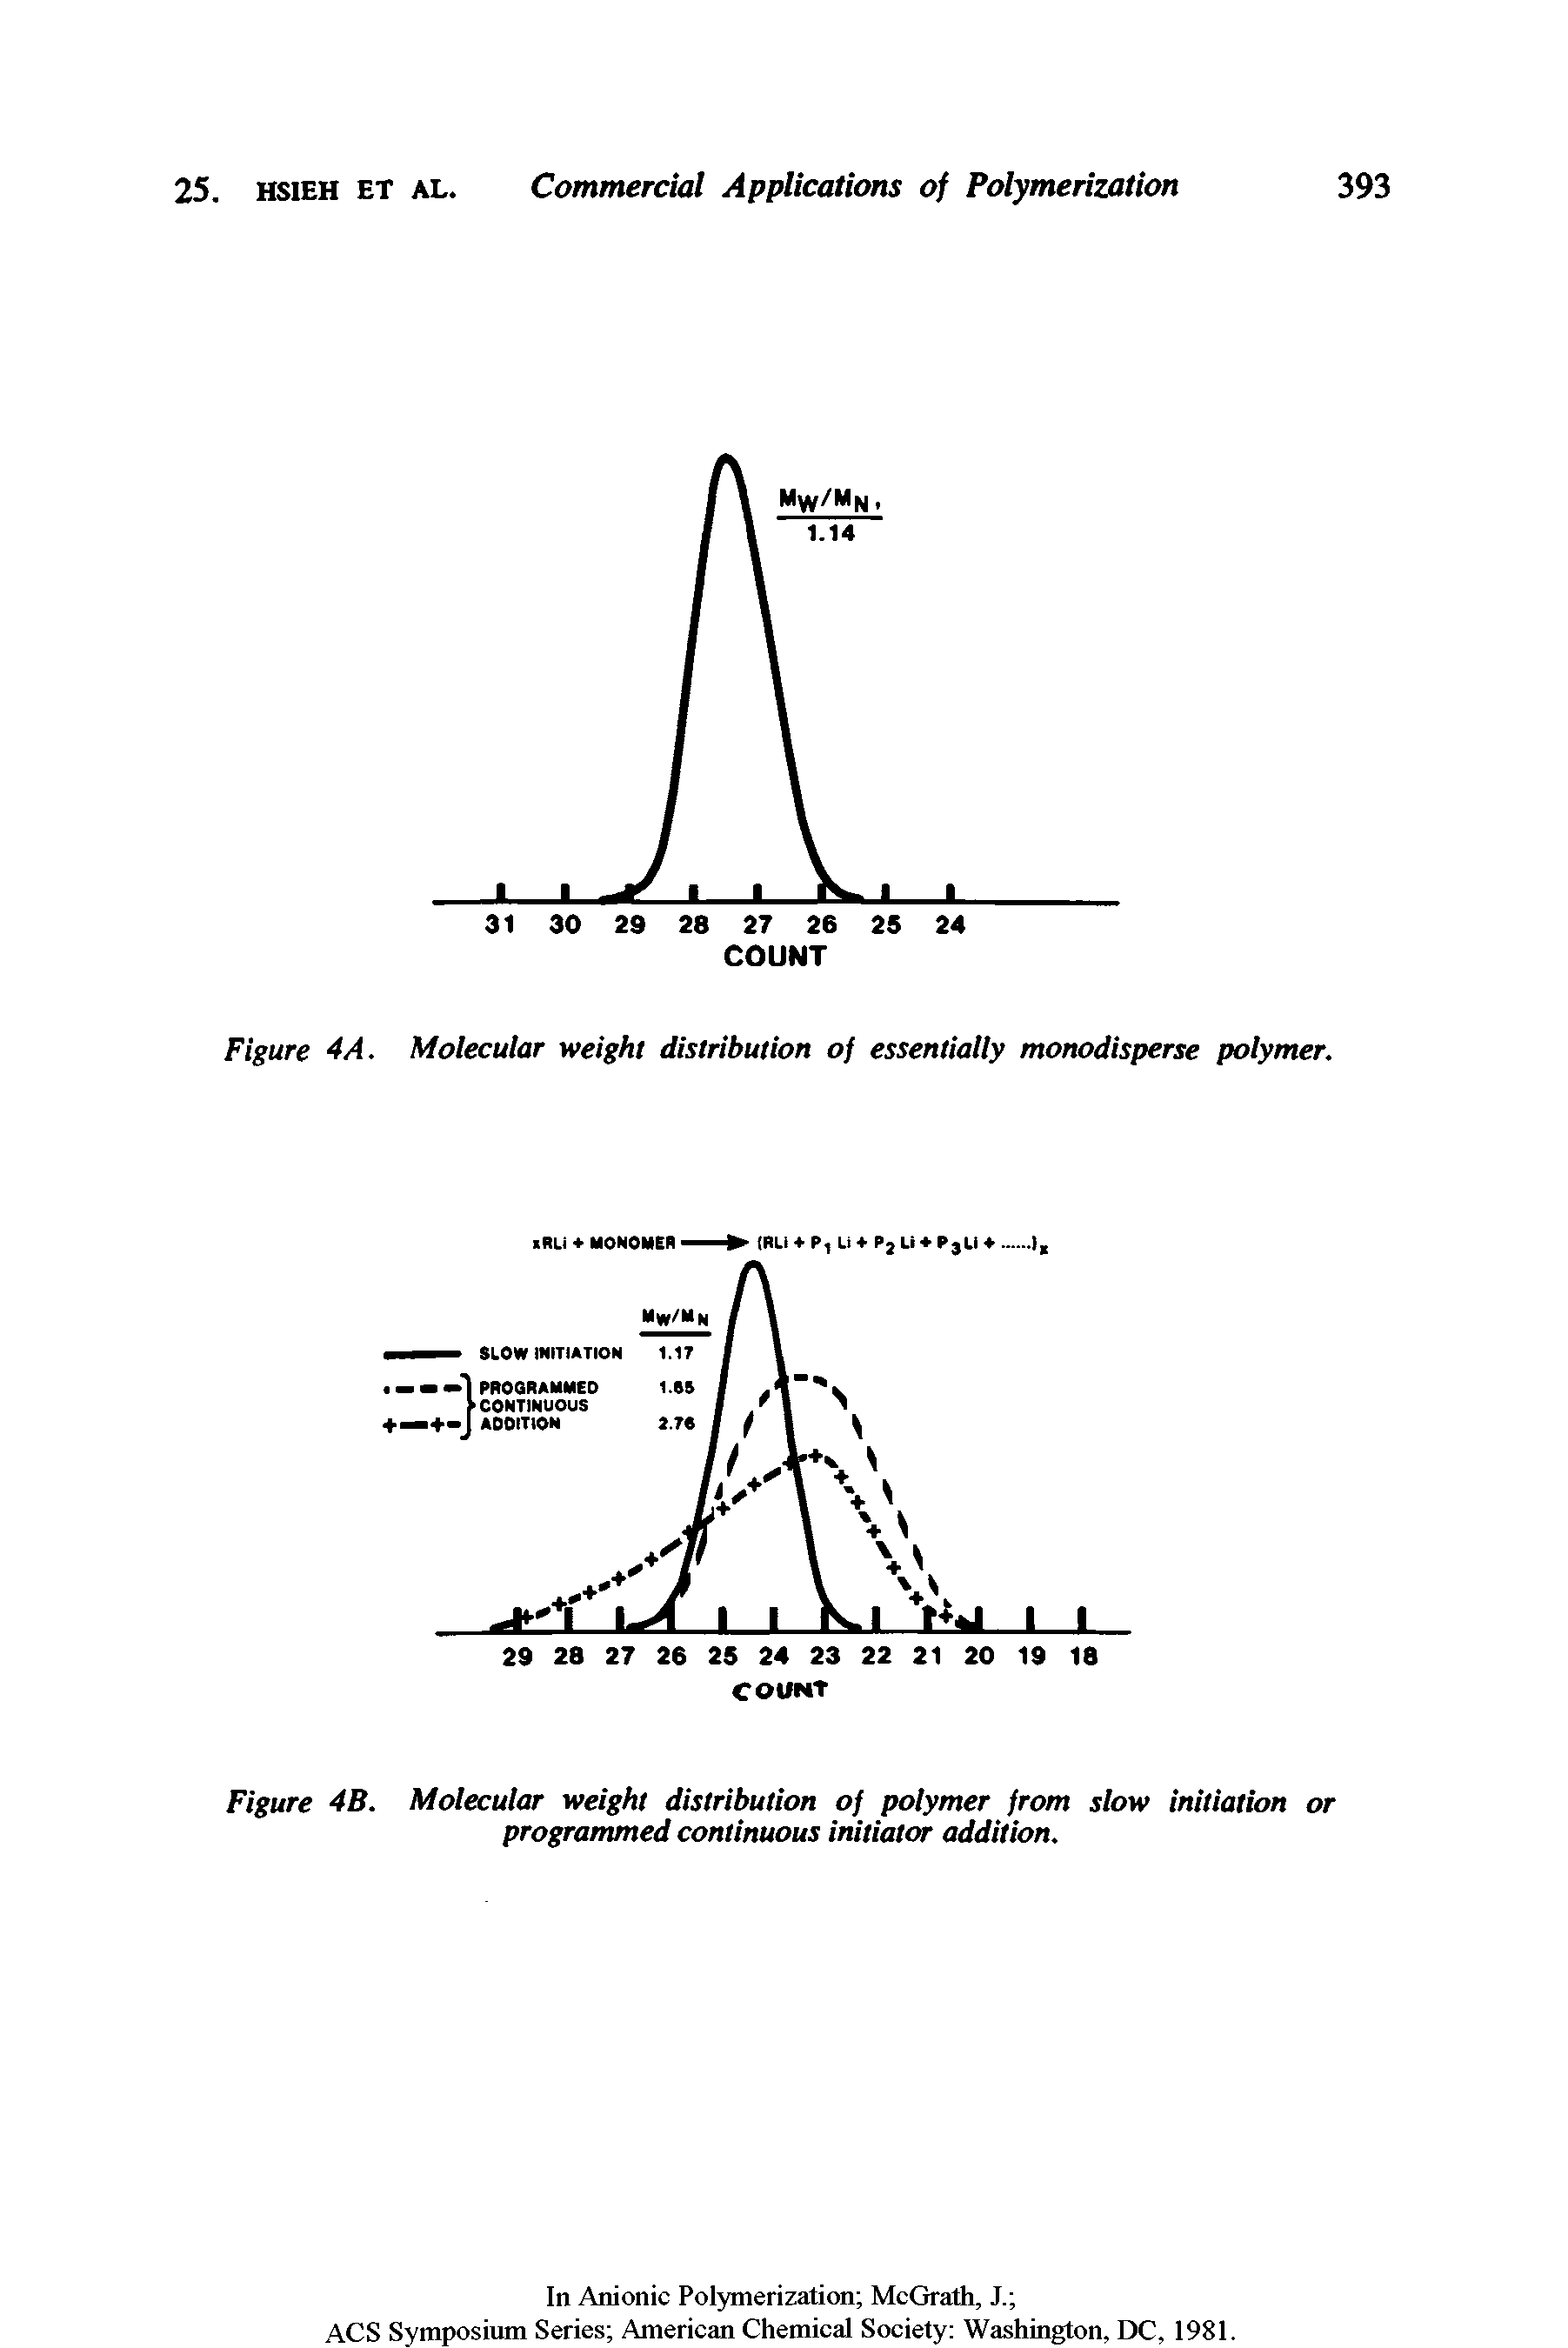 Figure 4A. Molecular weight distribution of essentially monodisperse polymer.